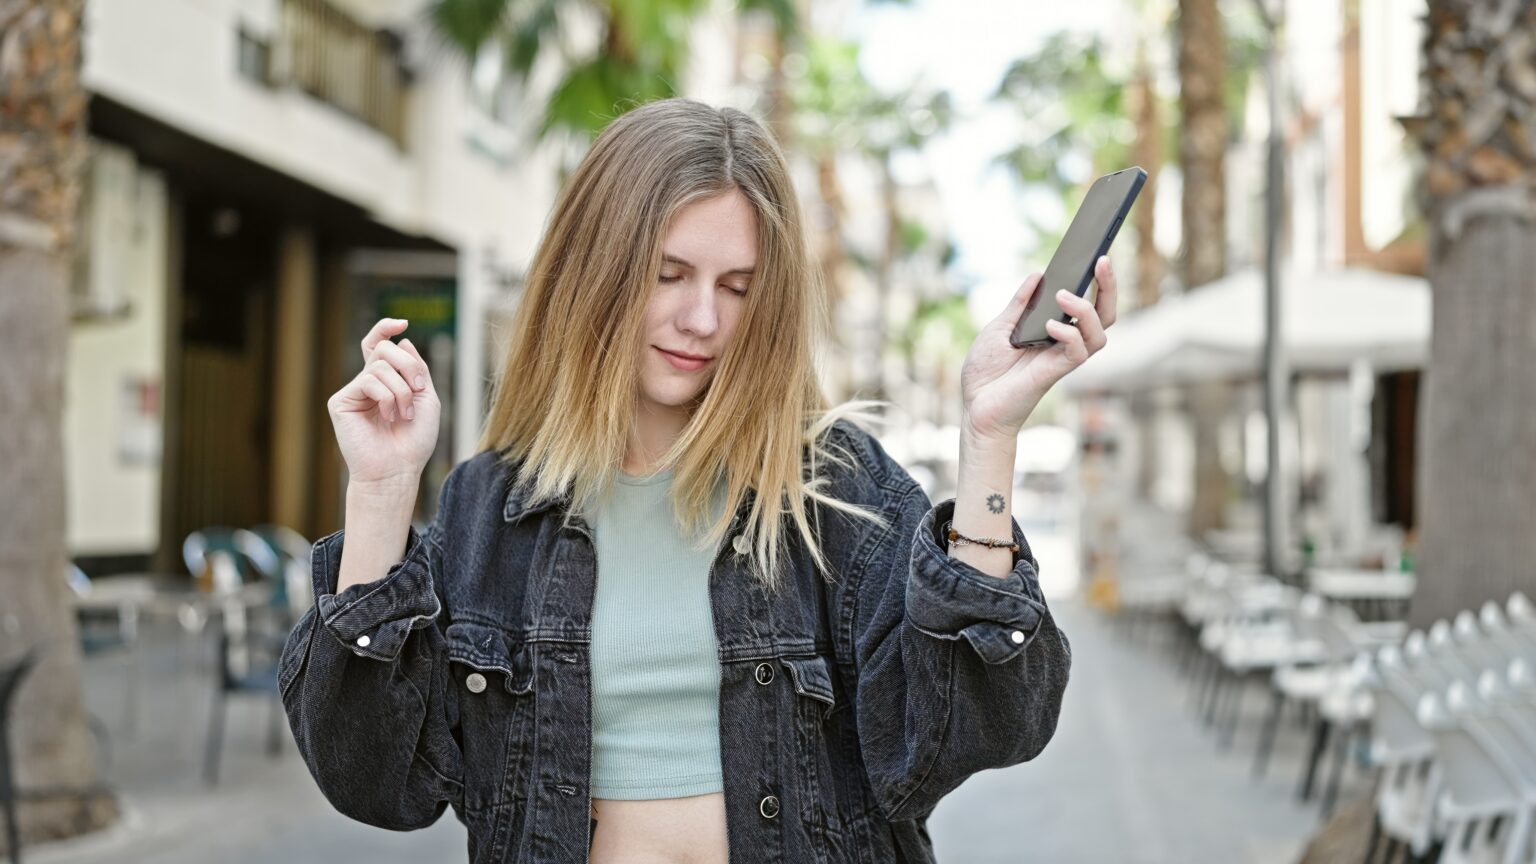 Woman enjoying hold music on mobile phone